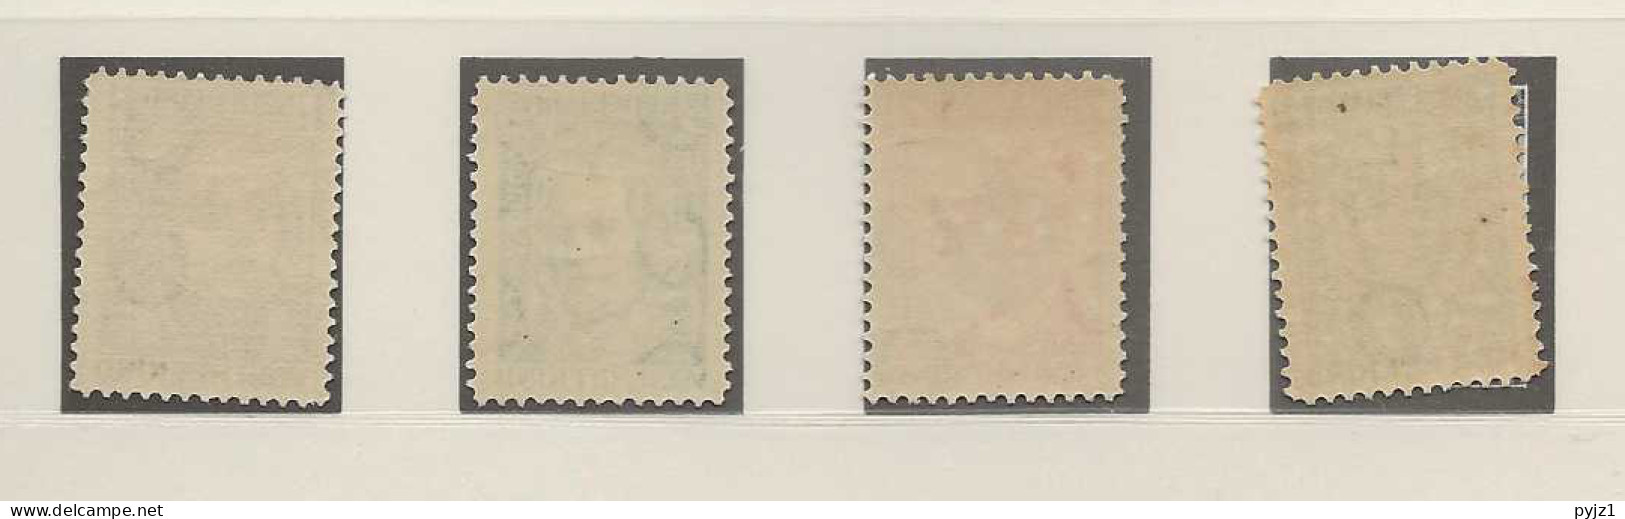 1928 MH/* Nederland NVPH 220-23 - Unused Stamps